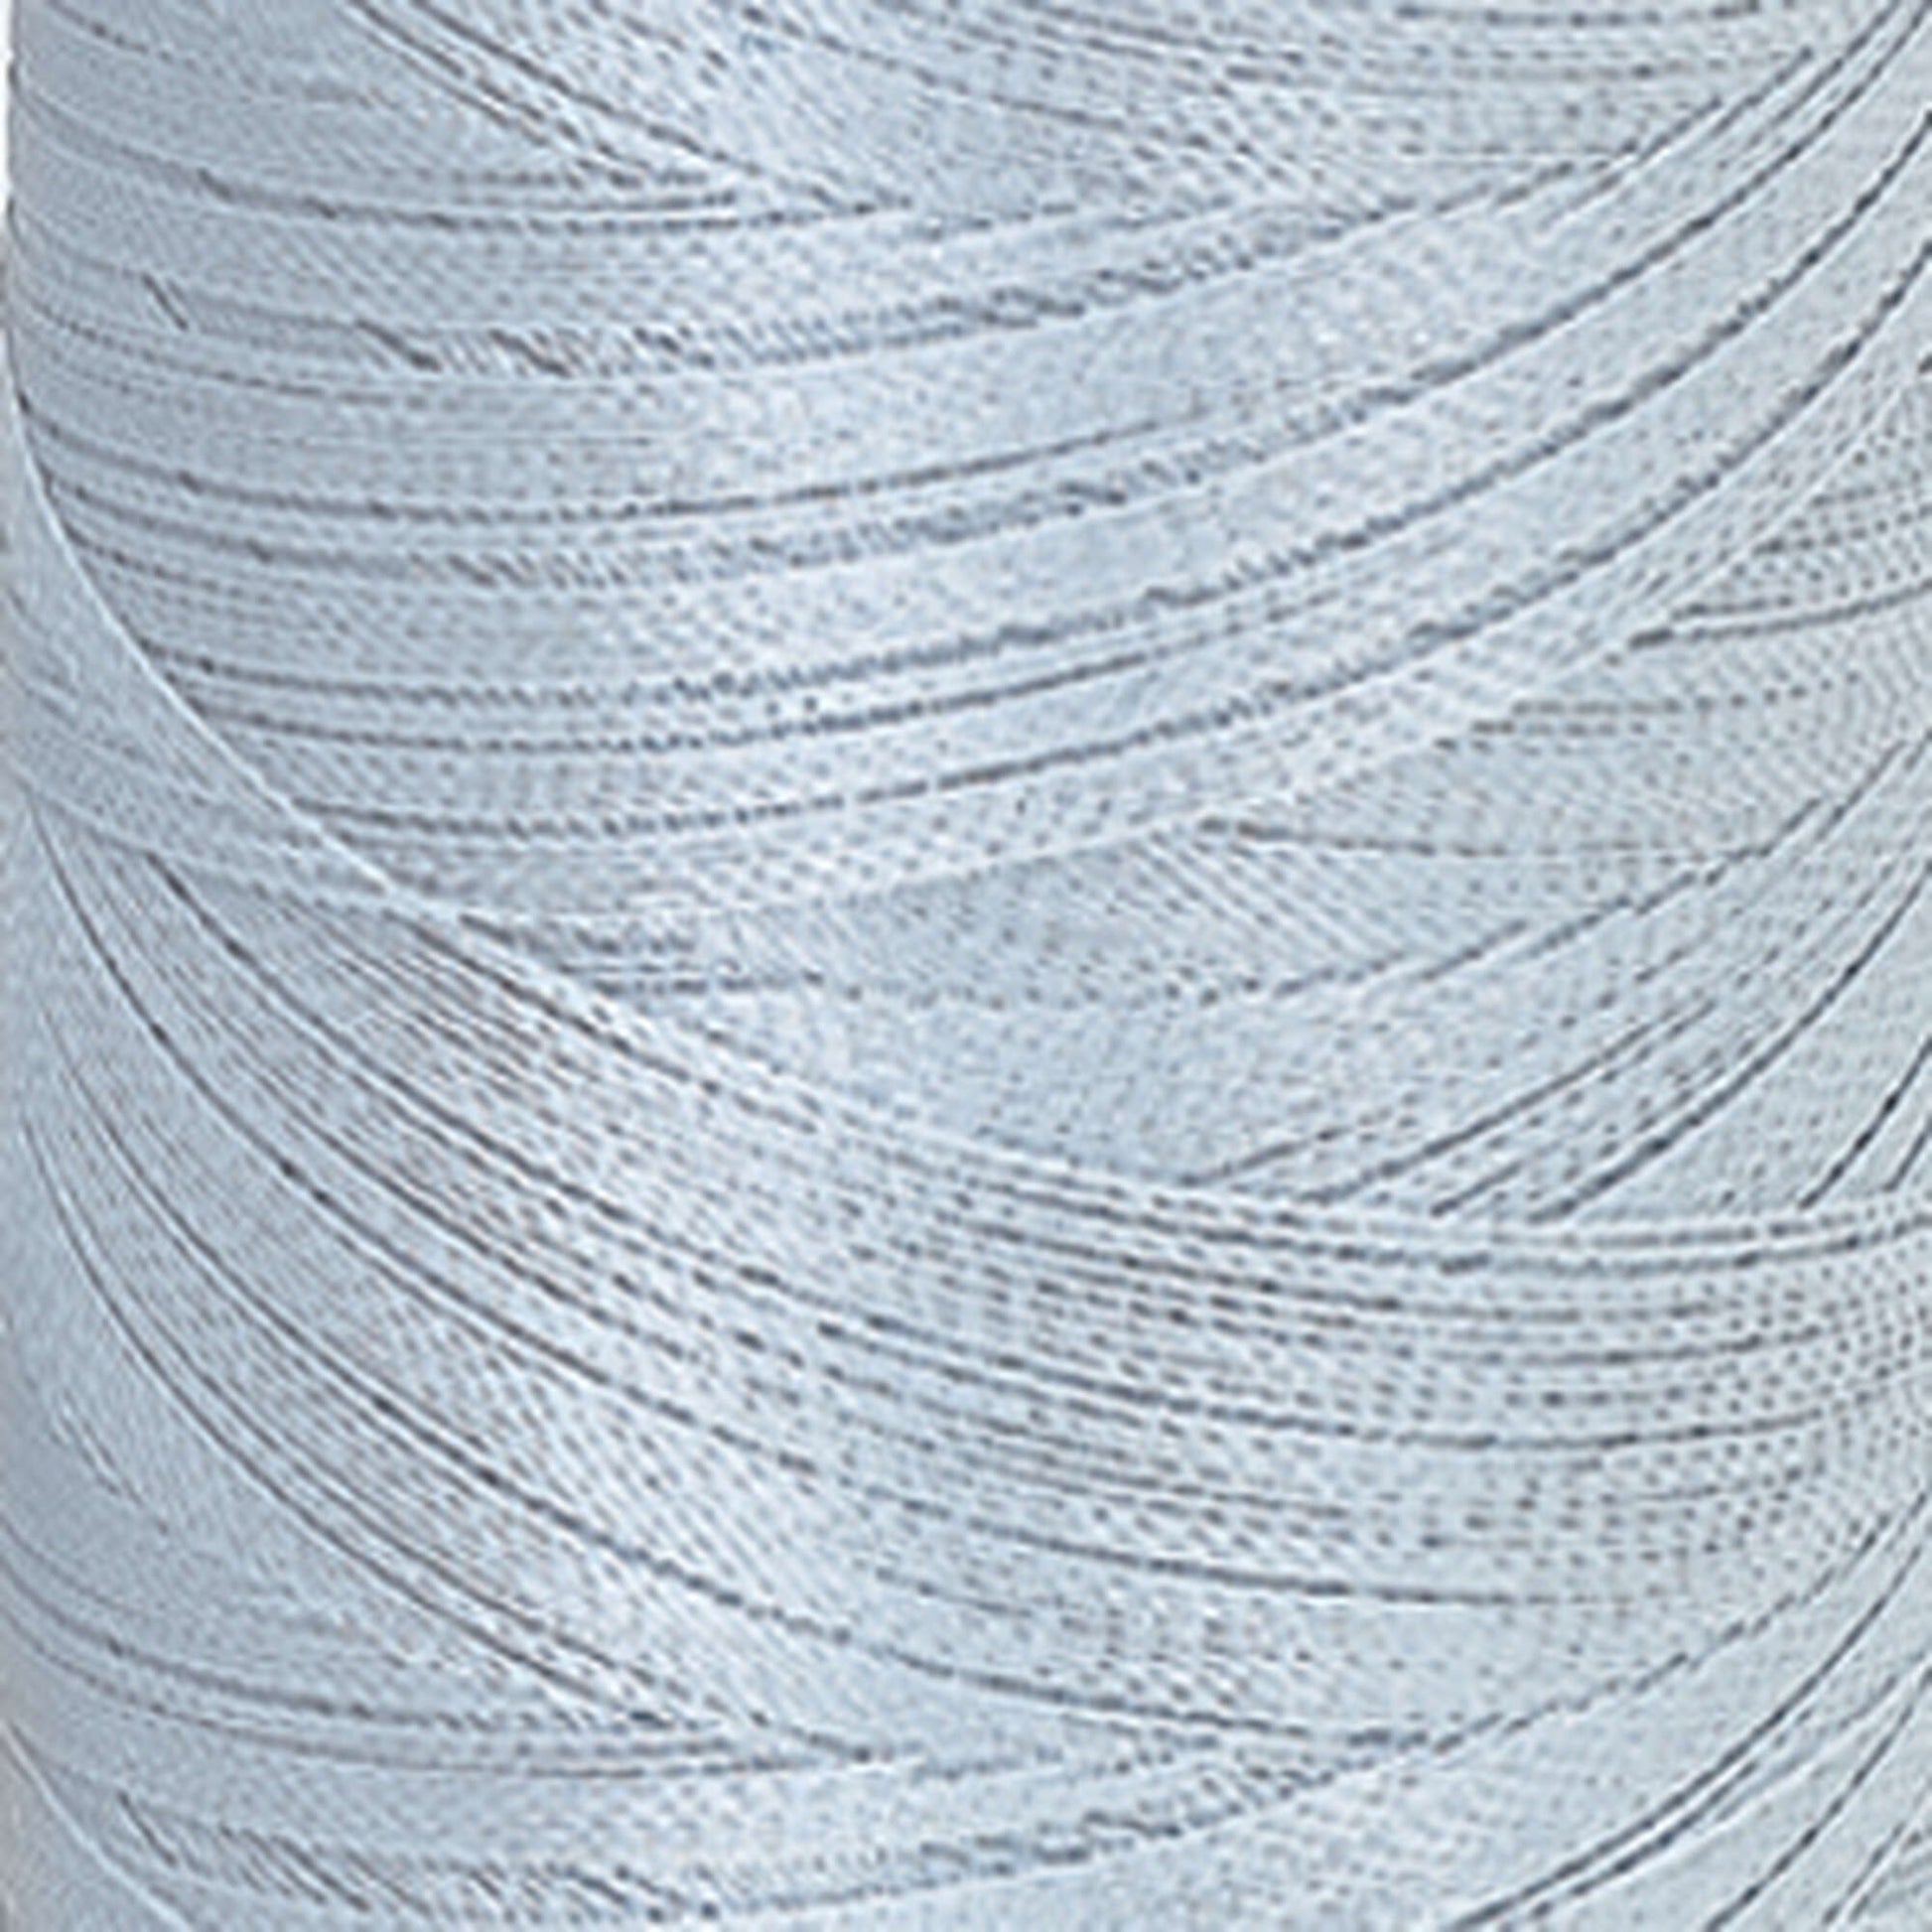 Coats & Clark Machine Embroidery Thread (1100 Yards) Silver